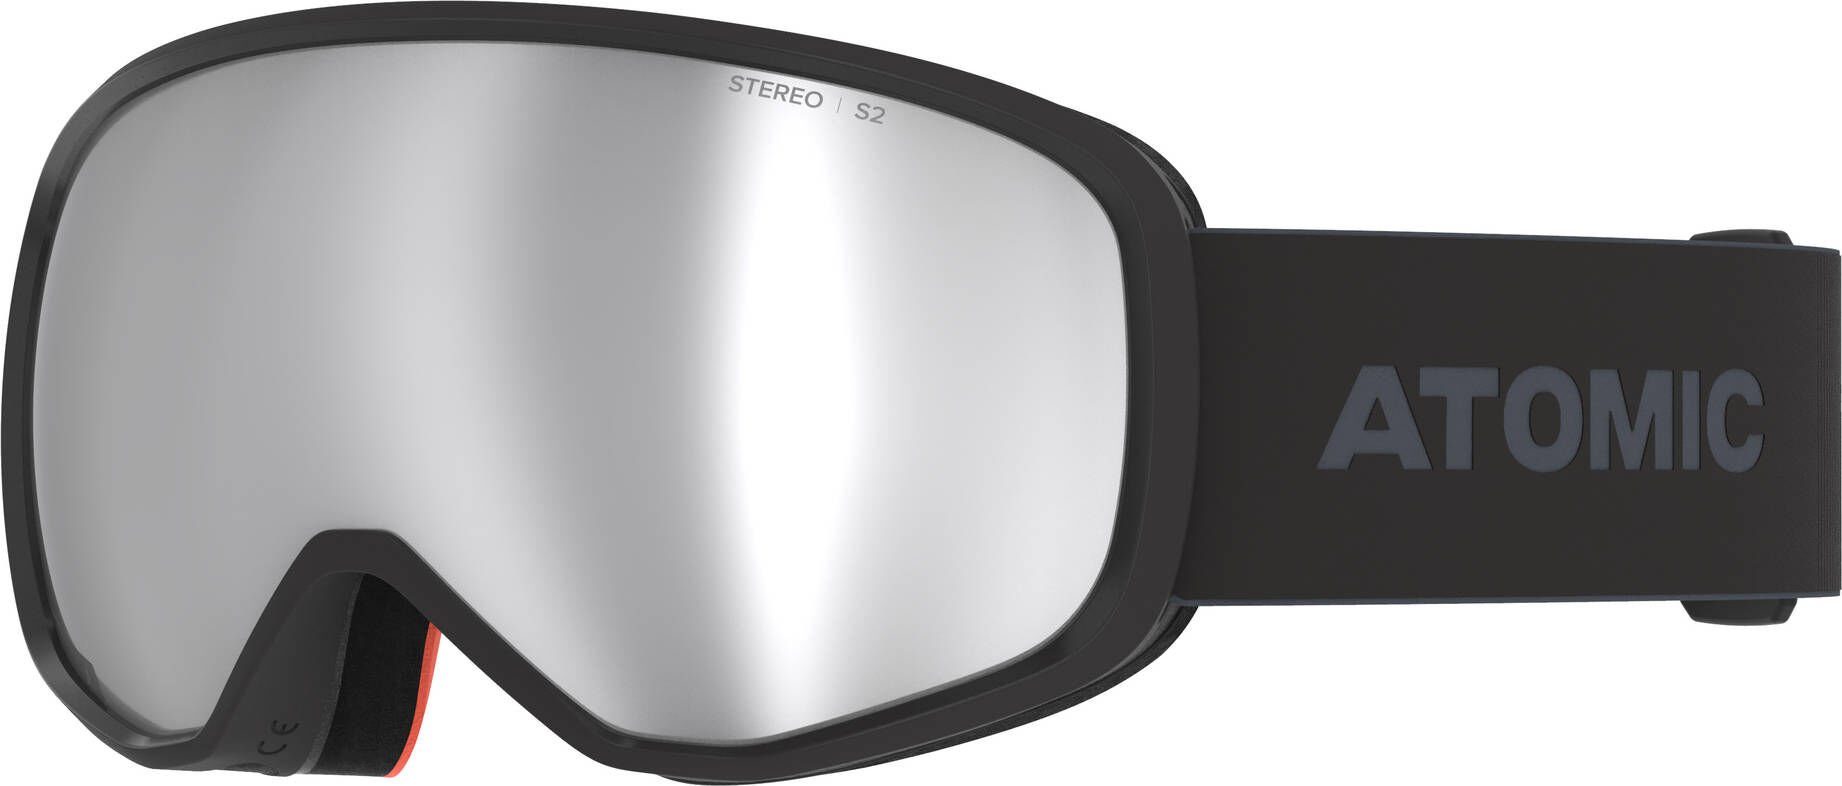 Atomic Skibrille Herren Skibrille REVENT STEREO BLACK | Brillen